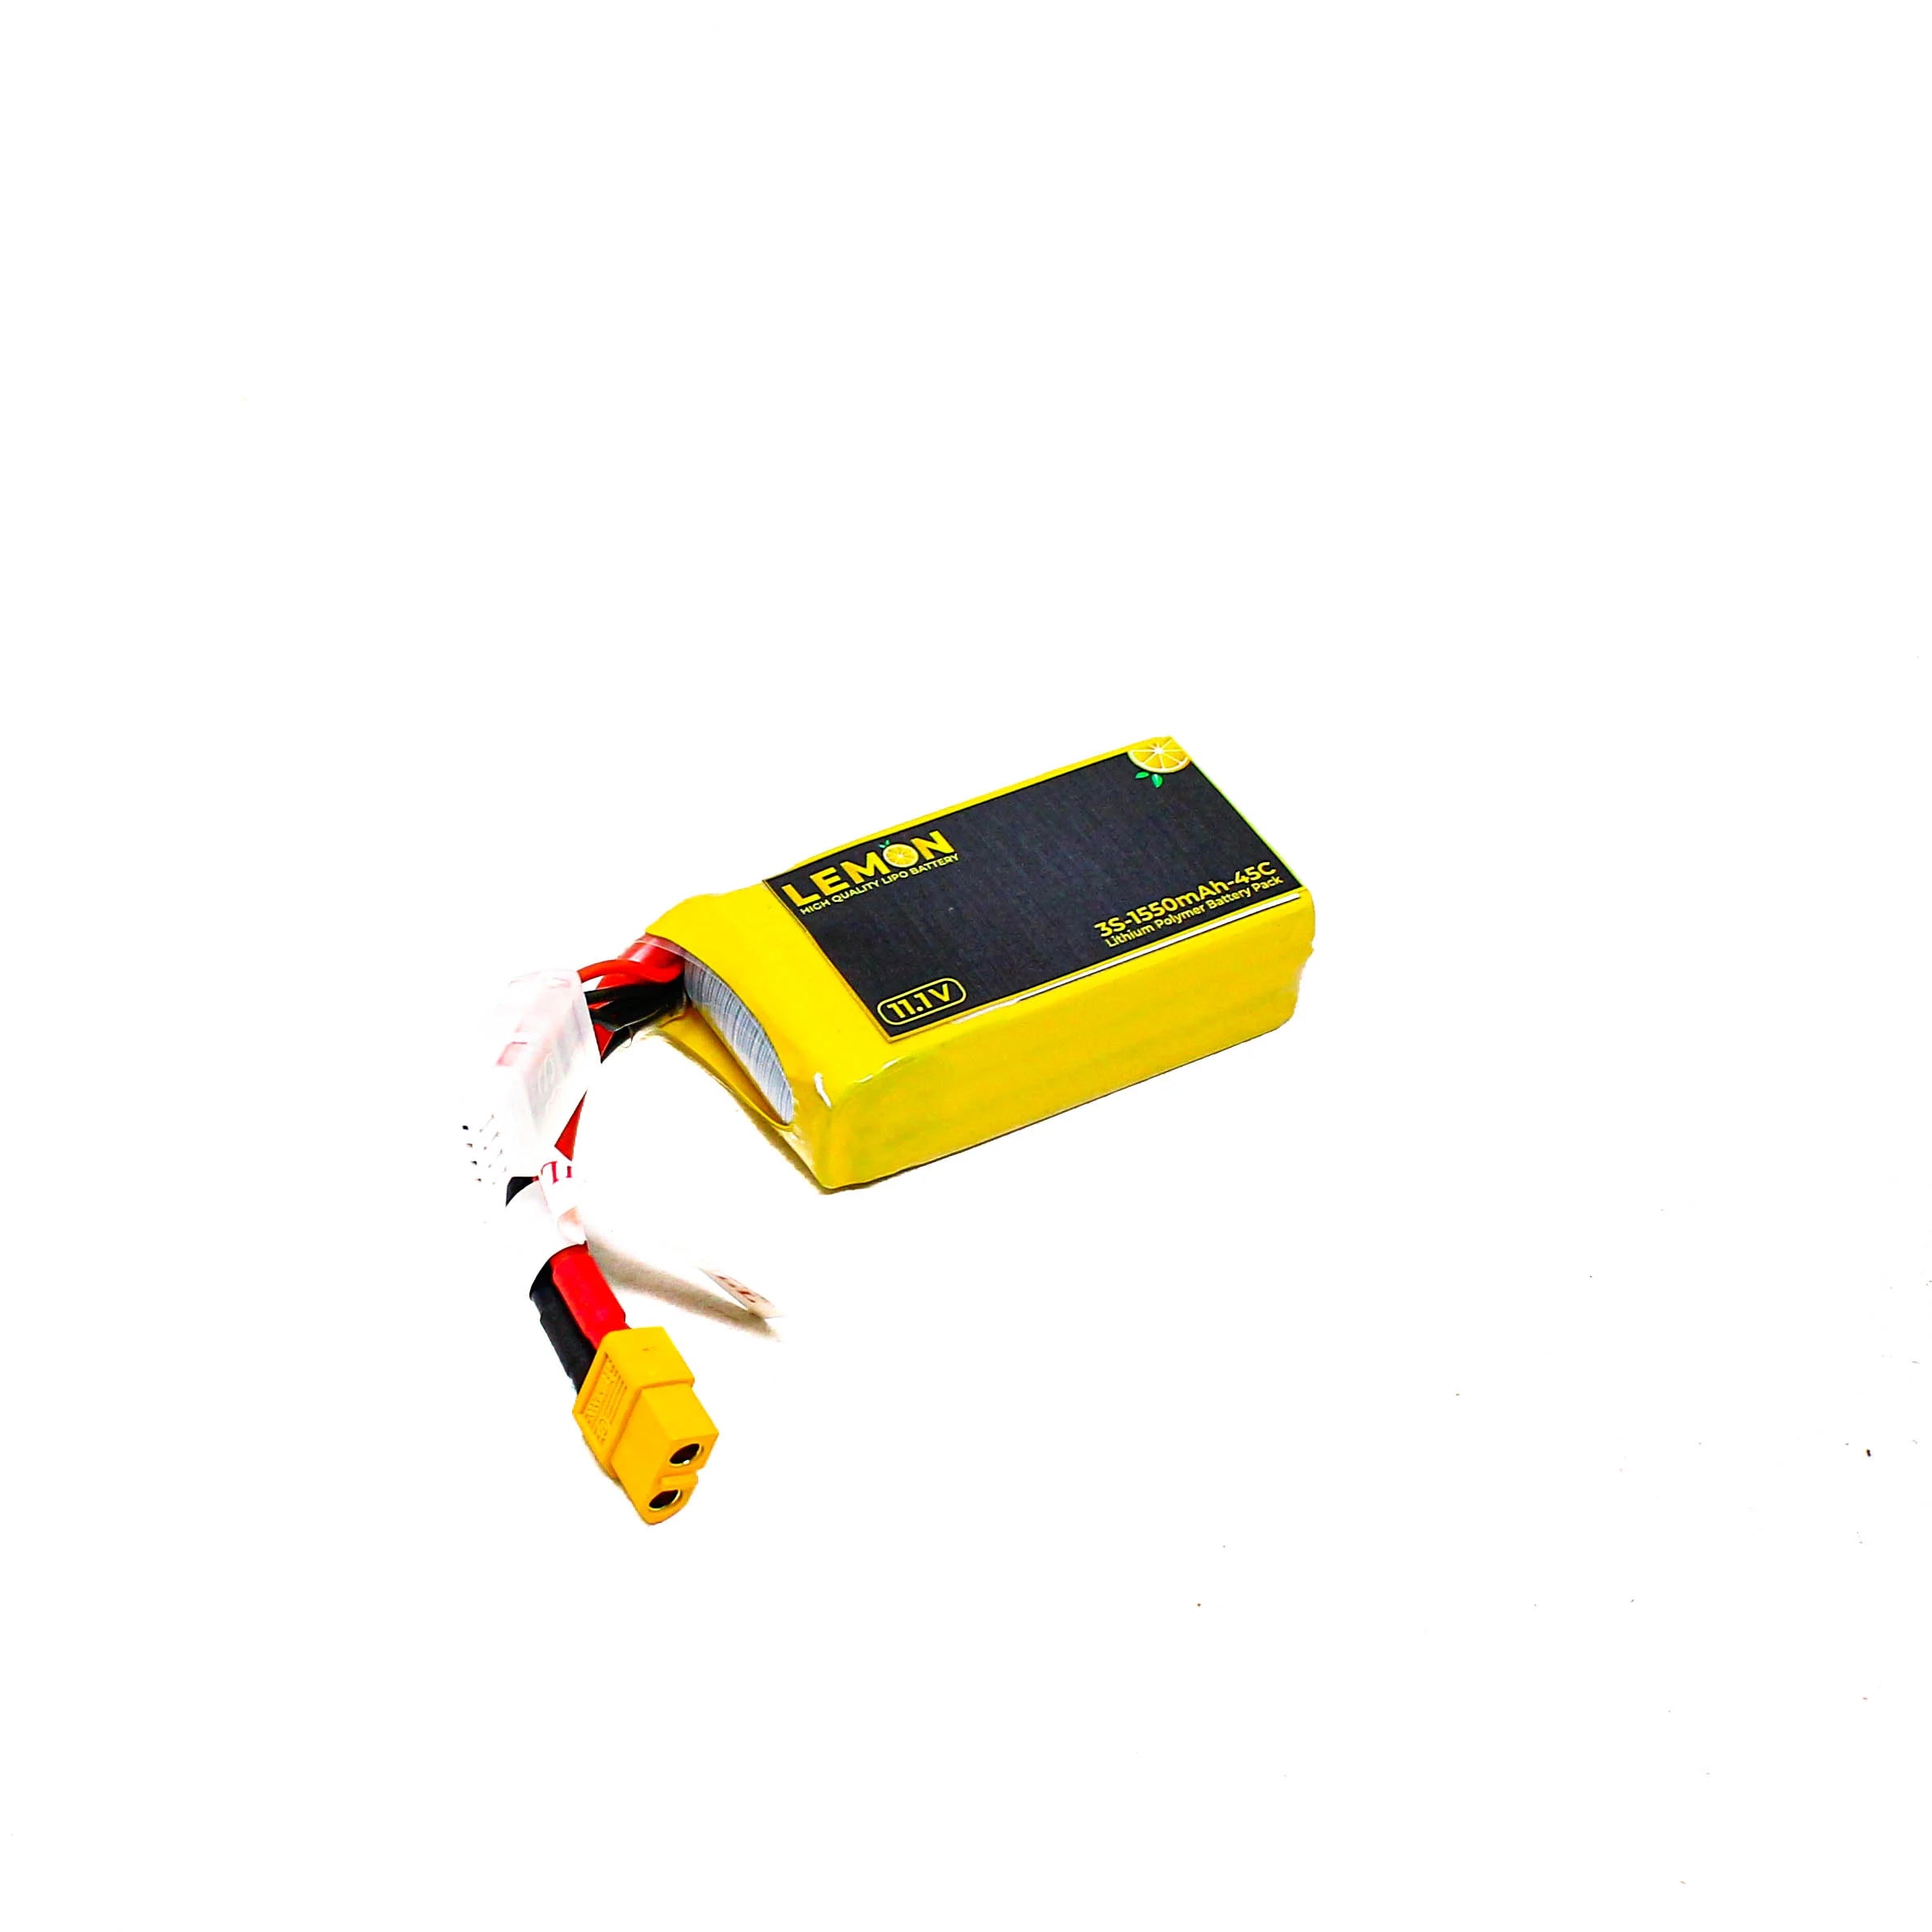 Lemon LIPO 1550mAh 3S 45C/90C Lithium Polymer Battery Pack